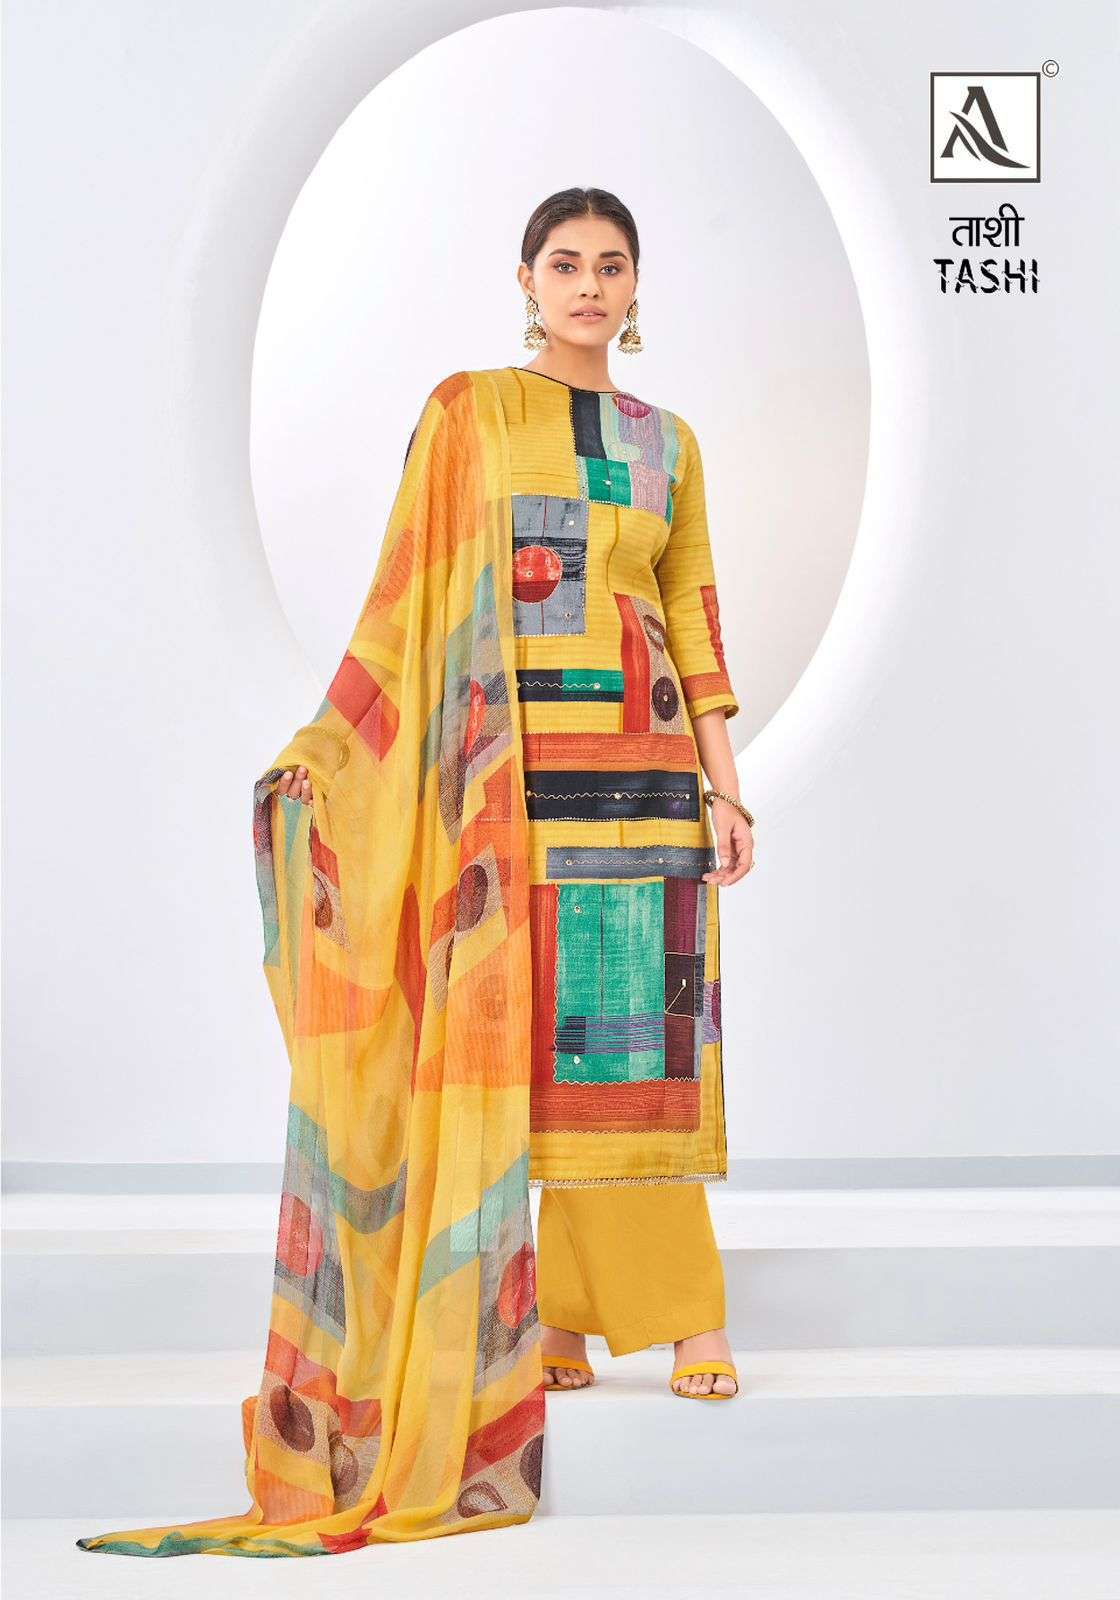 Alok Tashi Premium Cotton Designer salwar kameez wholesale suppliers